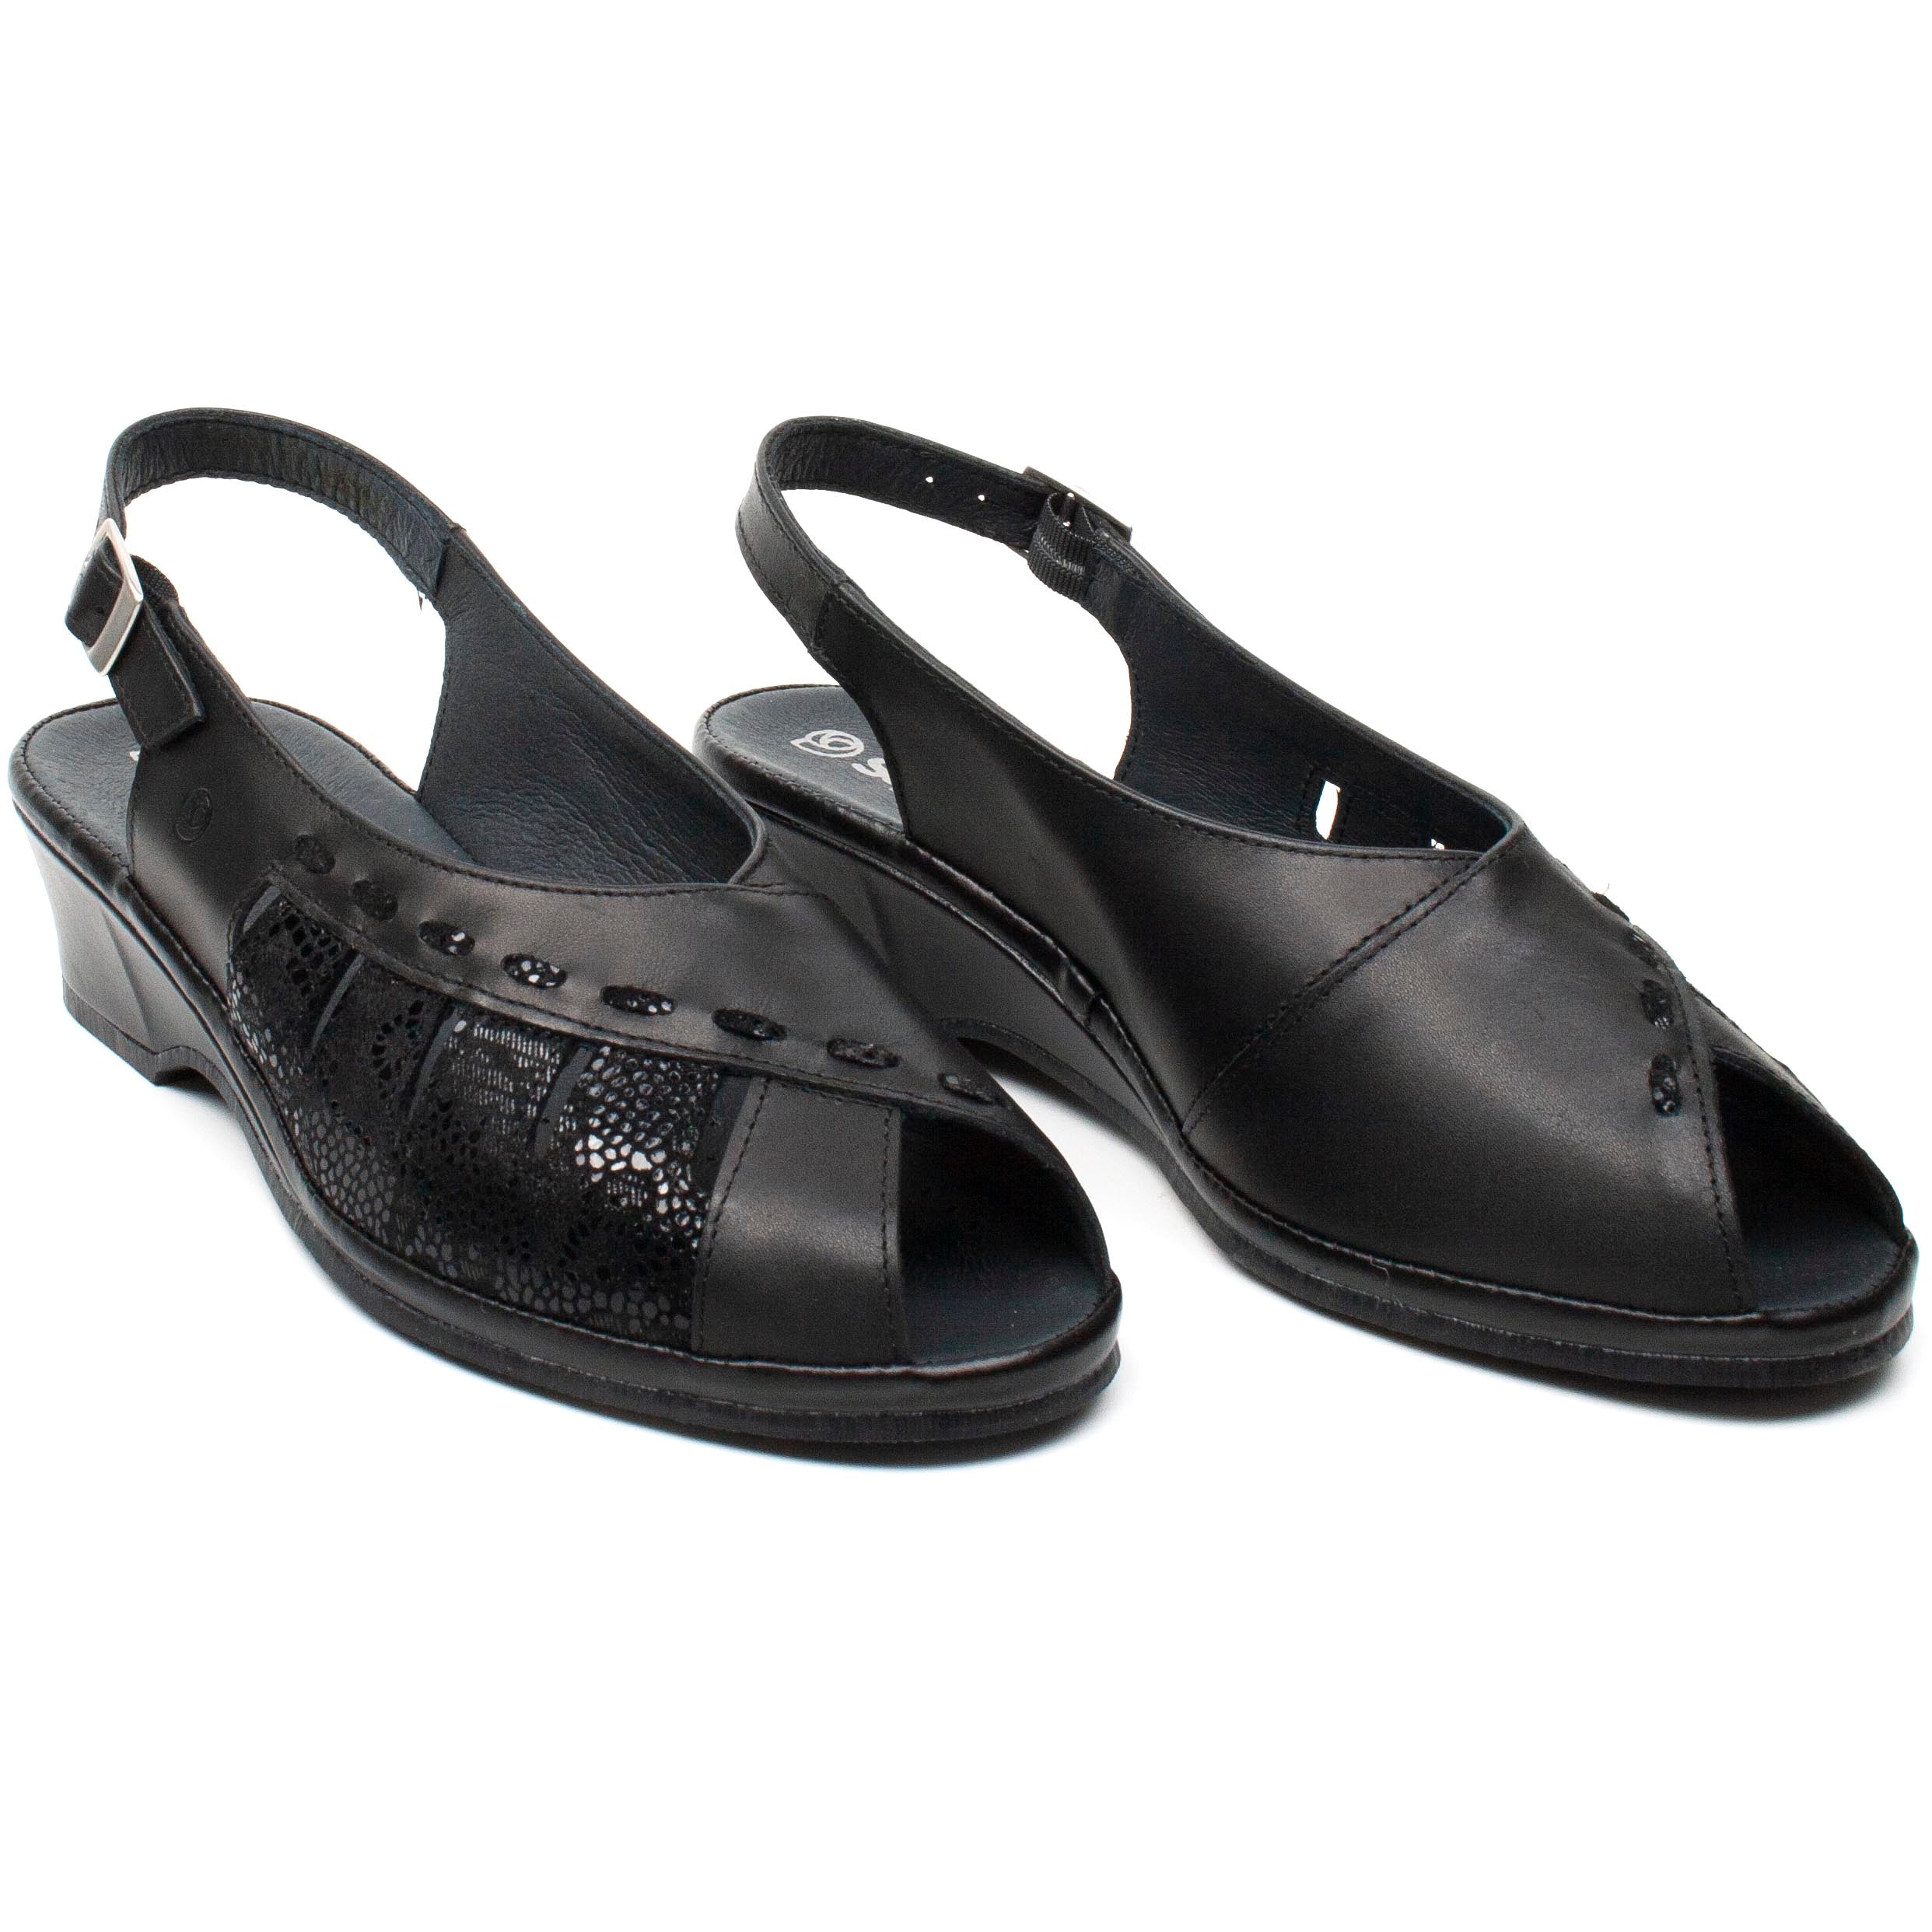 Suave sandale dama SU0290 ROMA 01 N negru ID2554-NG